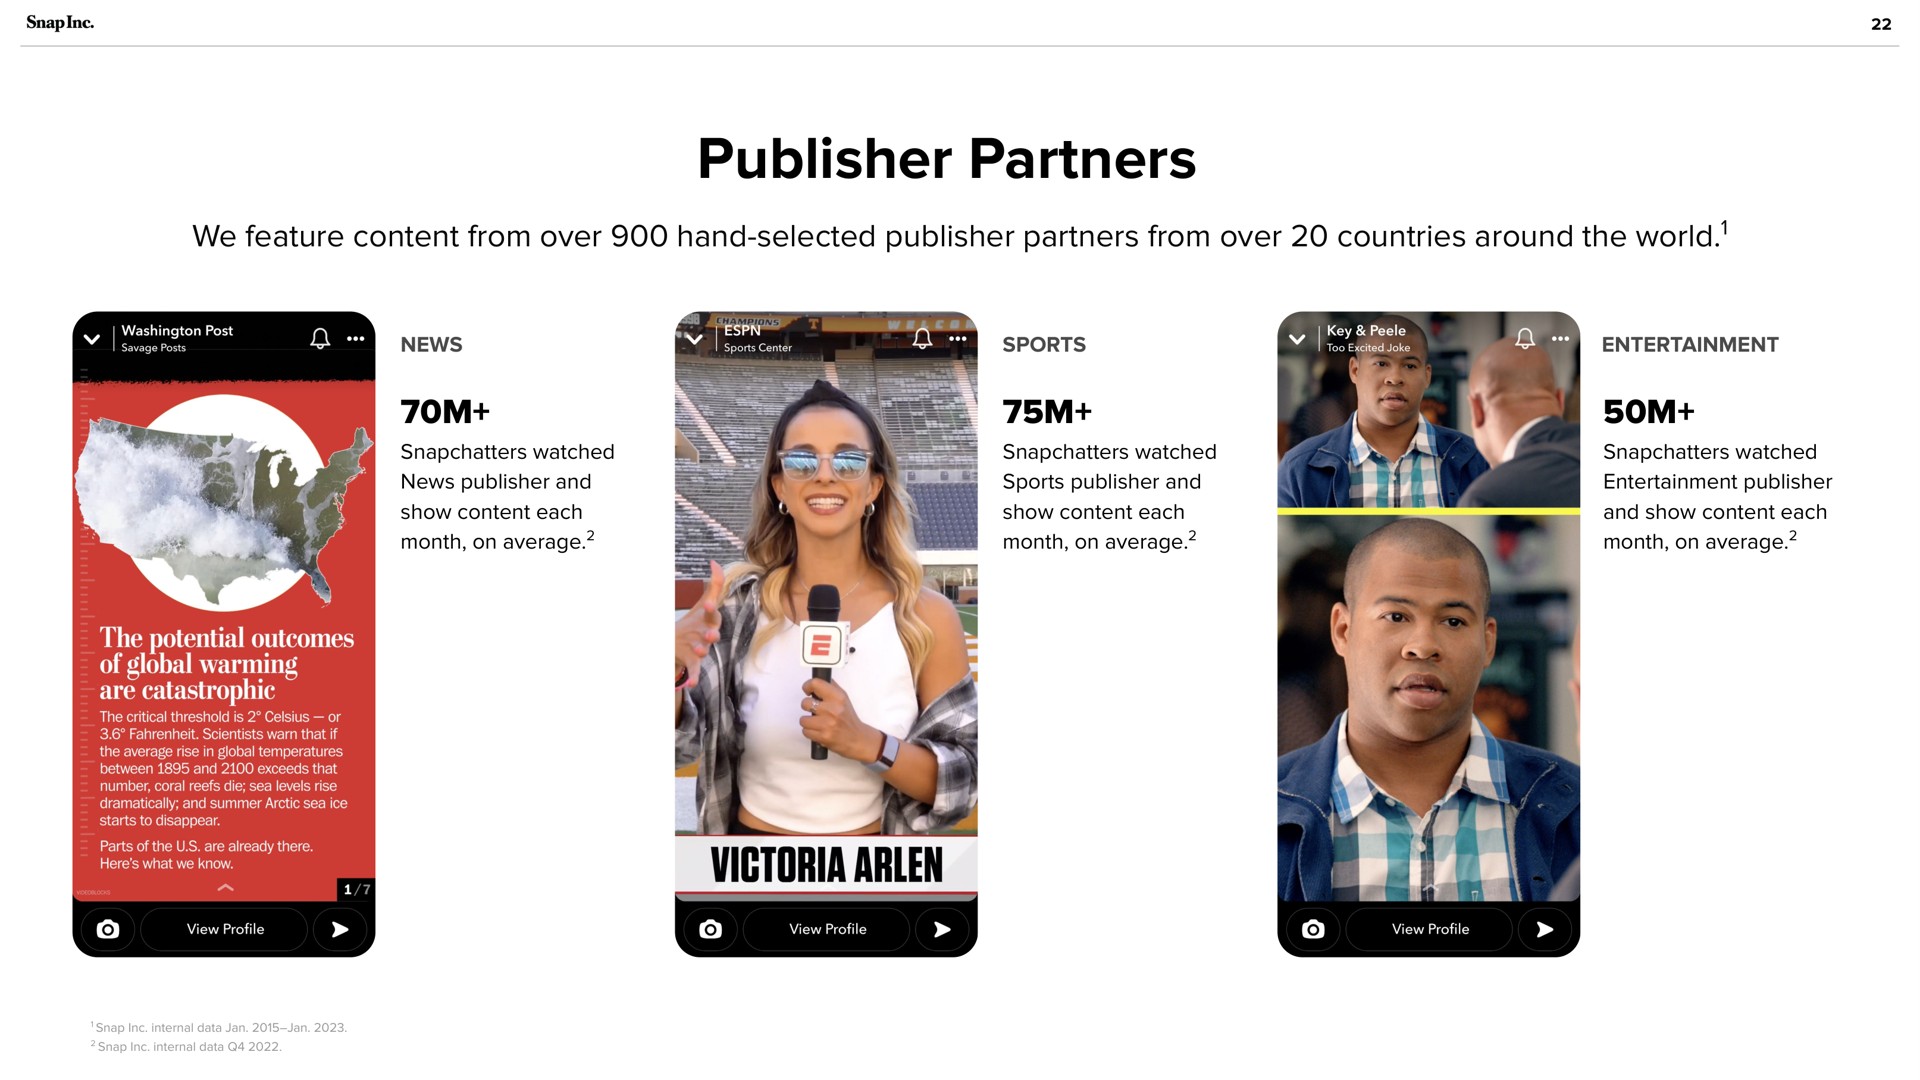 publisher partners | Snap Inc